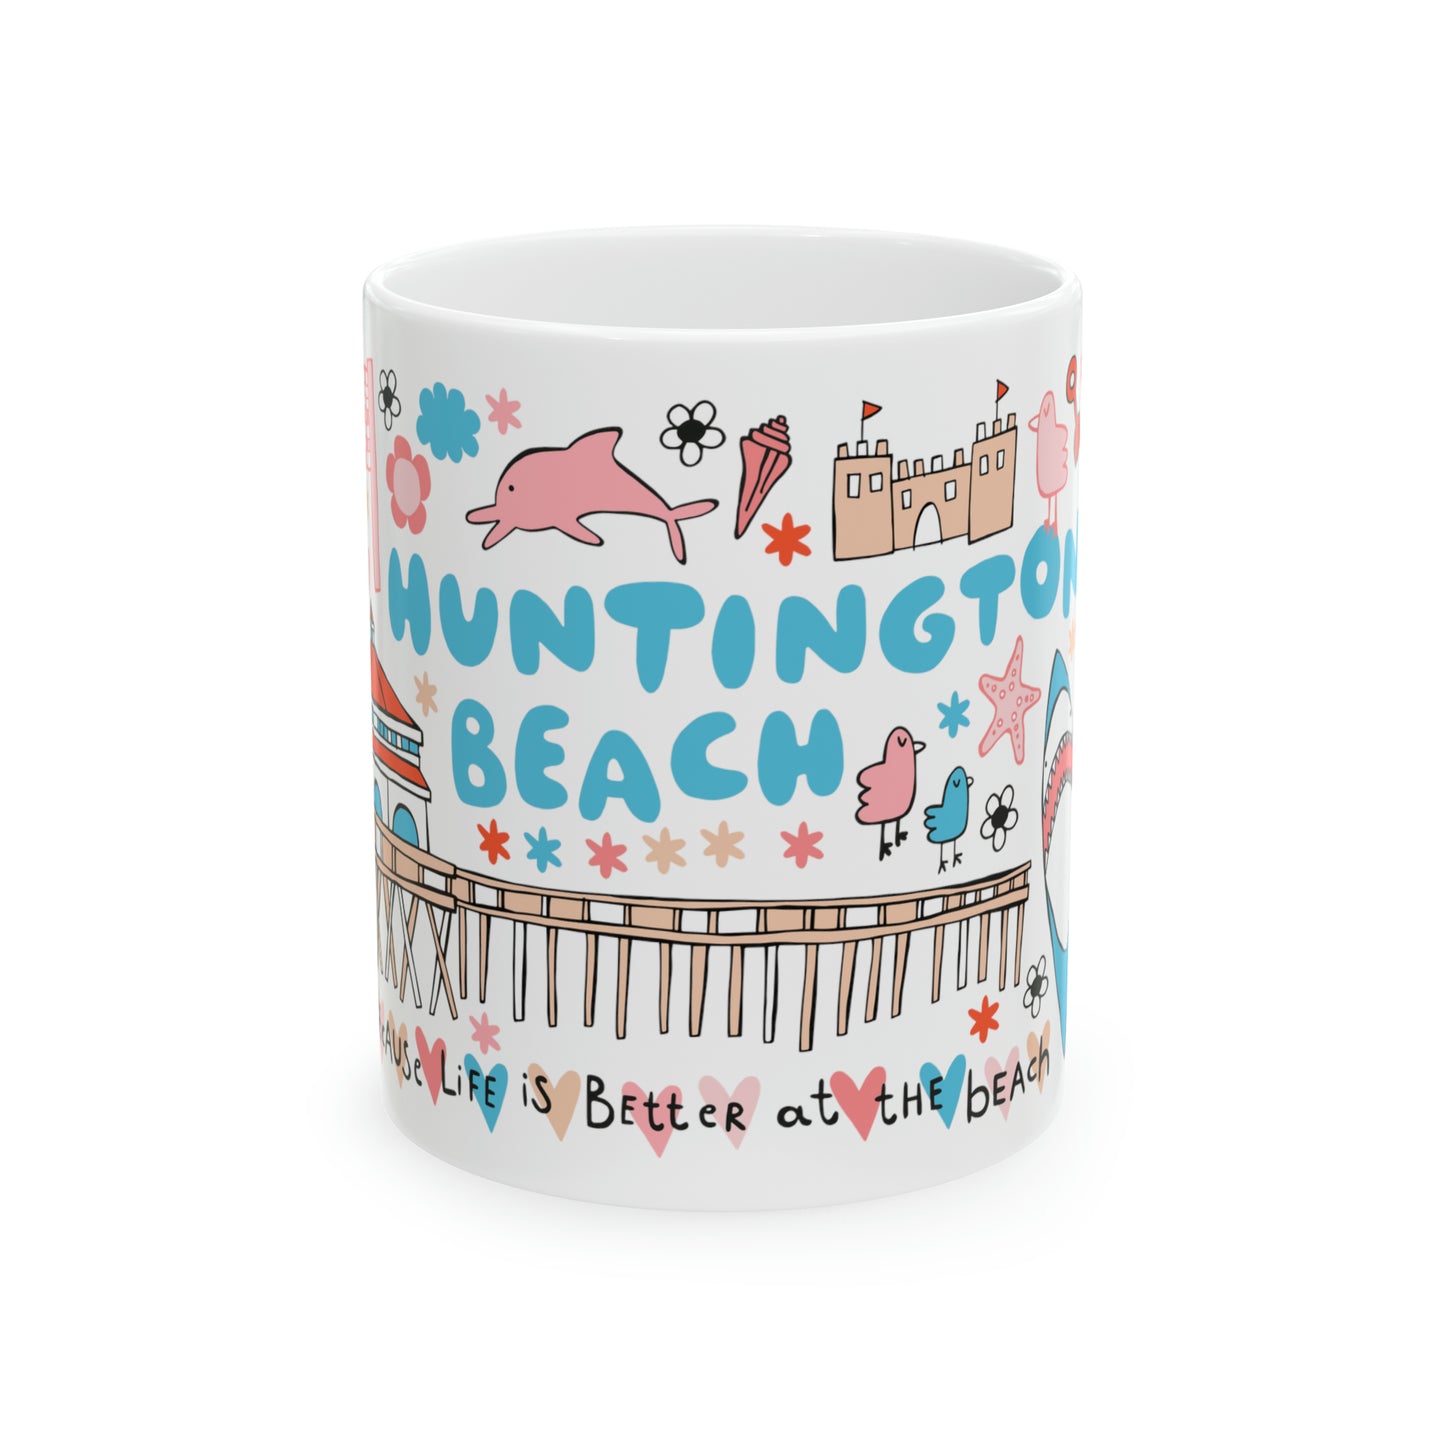 Huntington Beach - Coffee Mug (11oz)